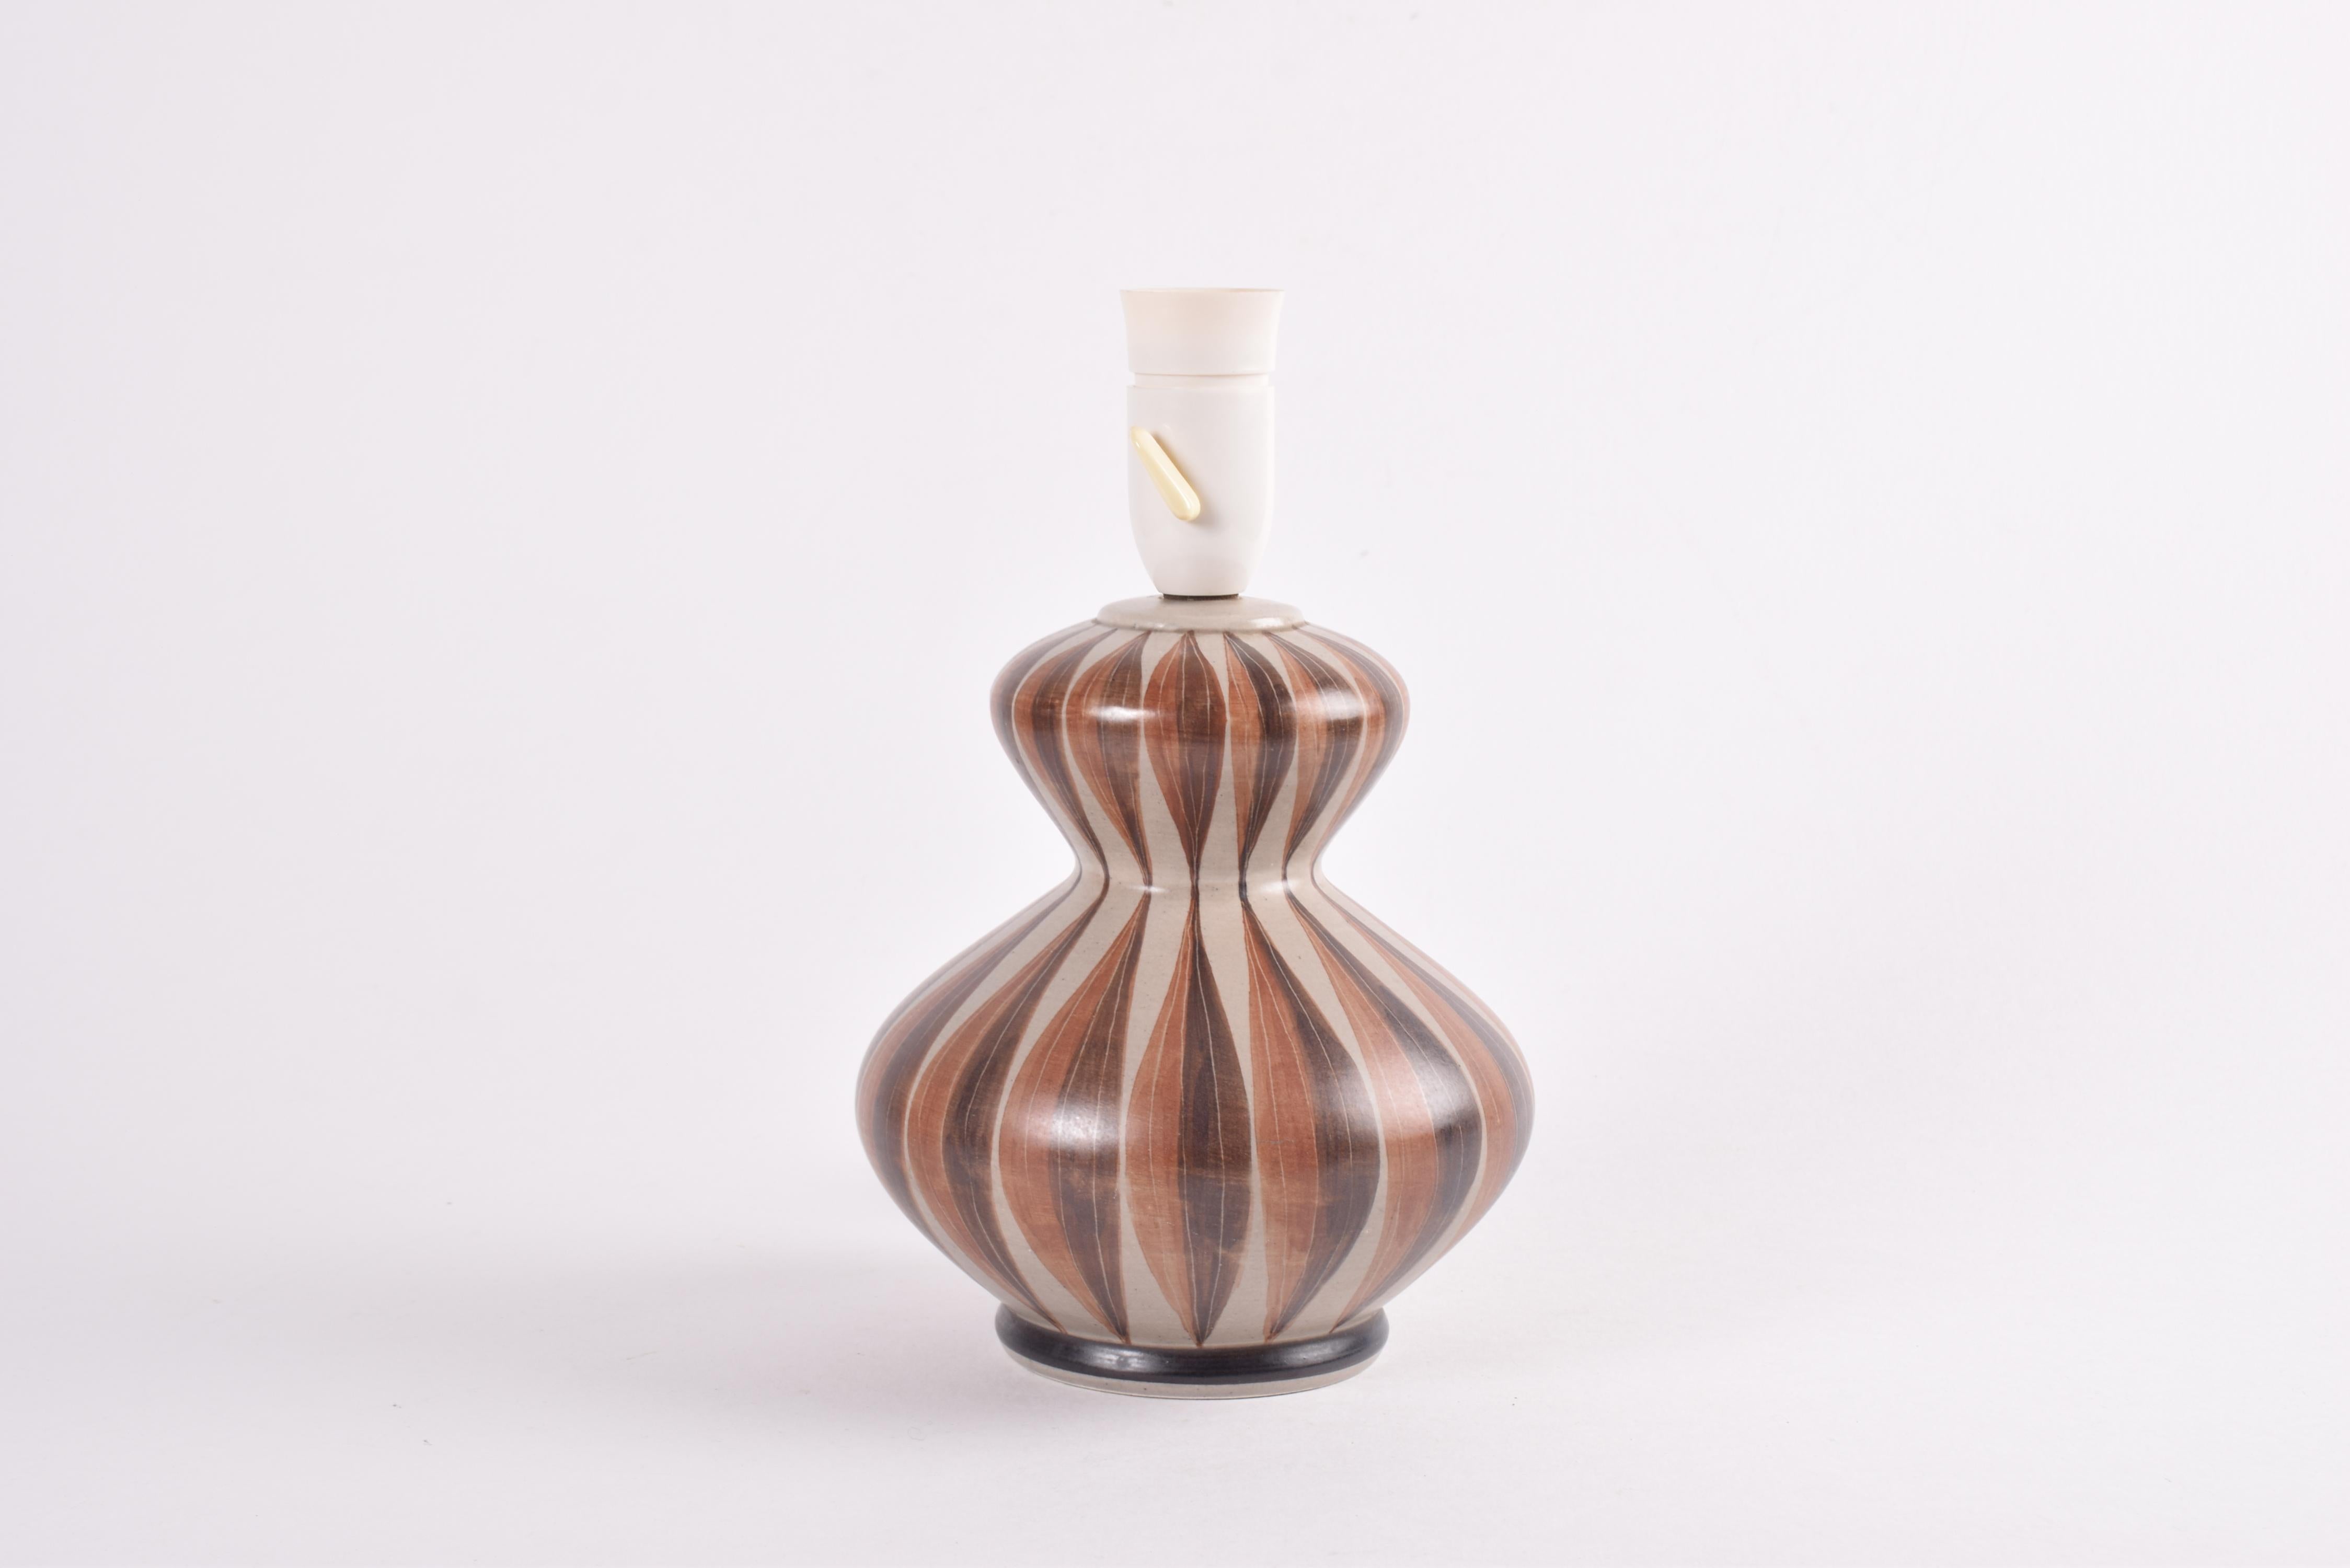 Scandinavian Modern Danish Sculptural Table Lamp with Brown Stripes by Eva & Johannes Andersen 1960s For Sale